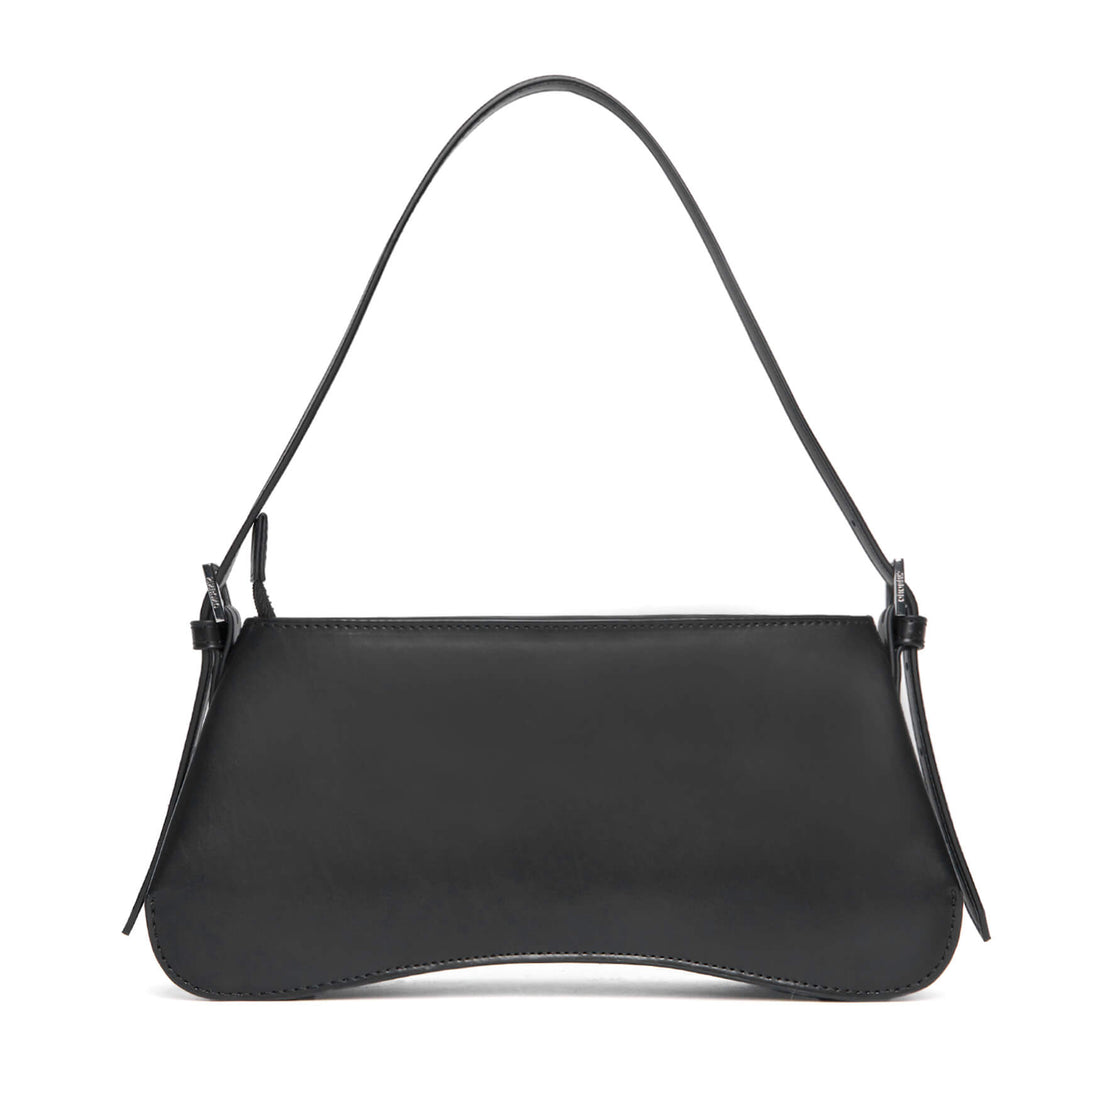 SINBONO Women's Eva Shoulder Bag Black - Sustainable Leather Bag for Women